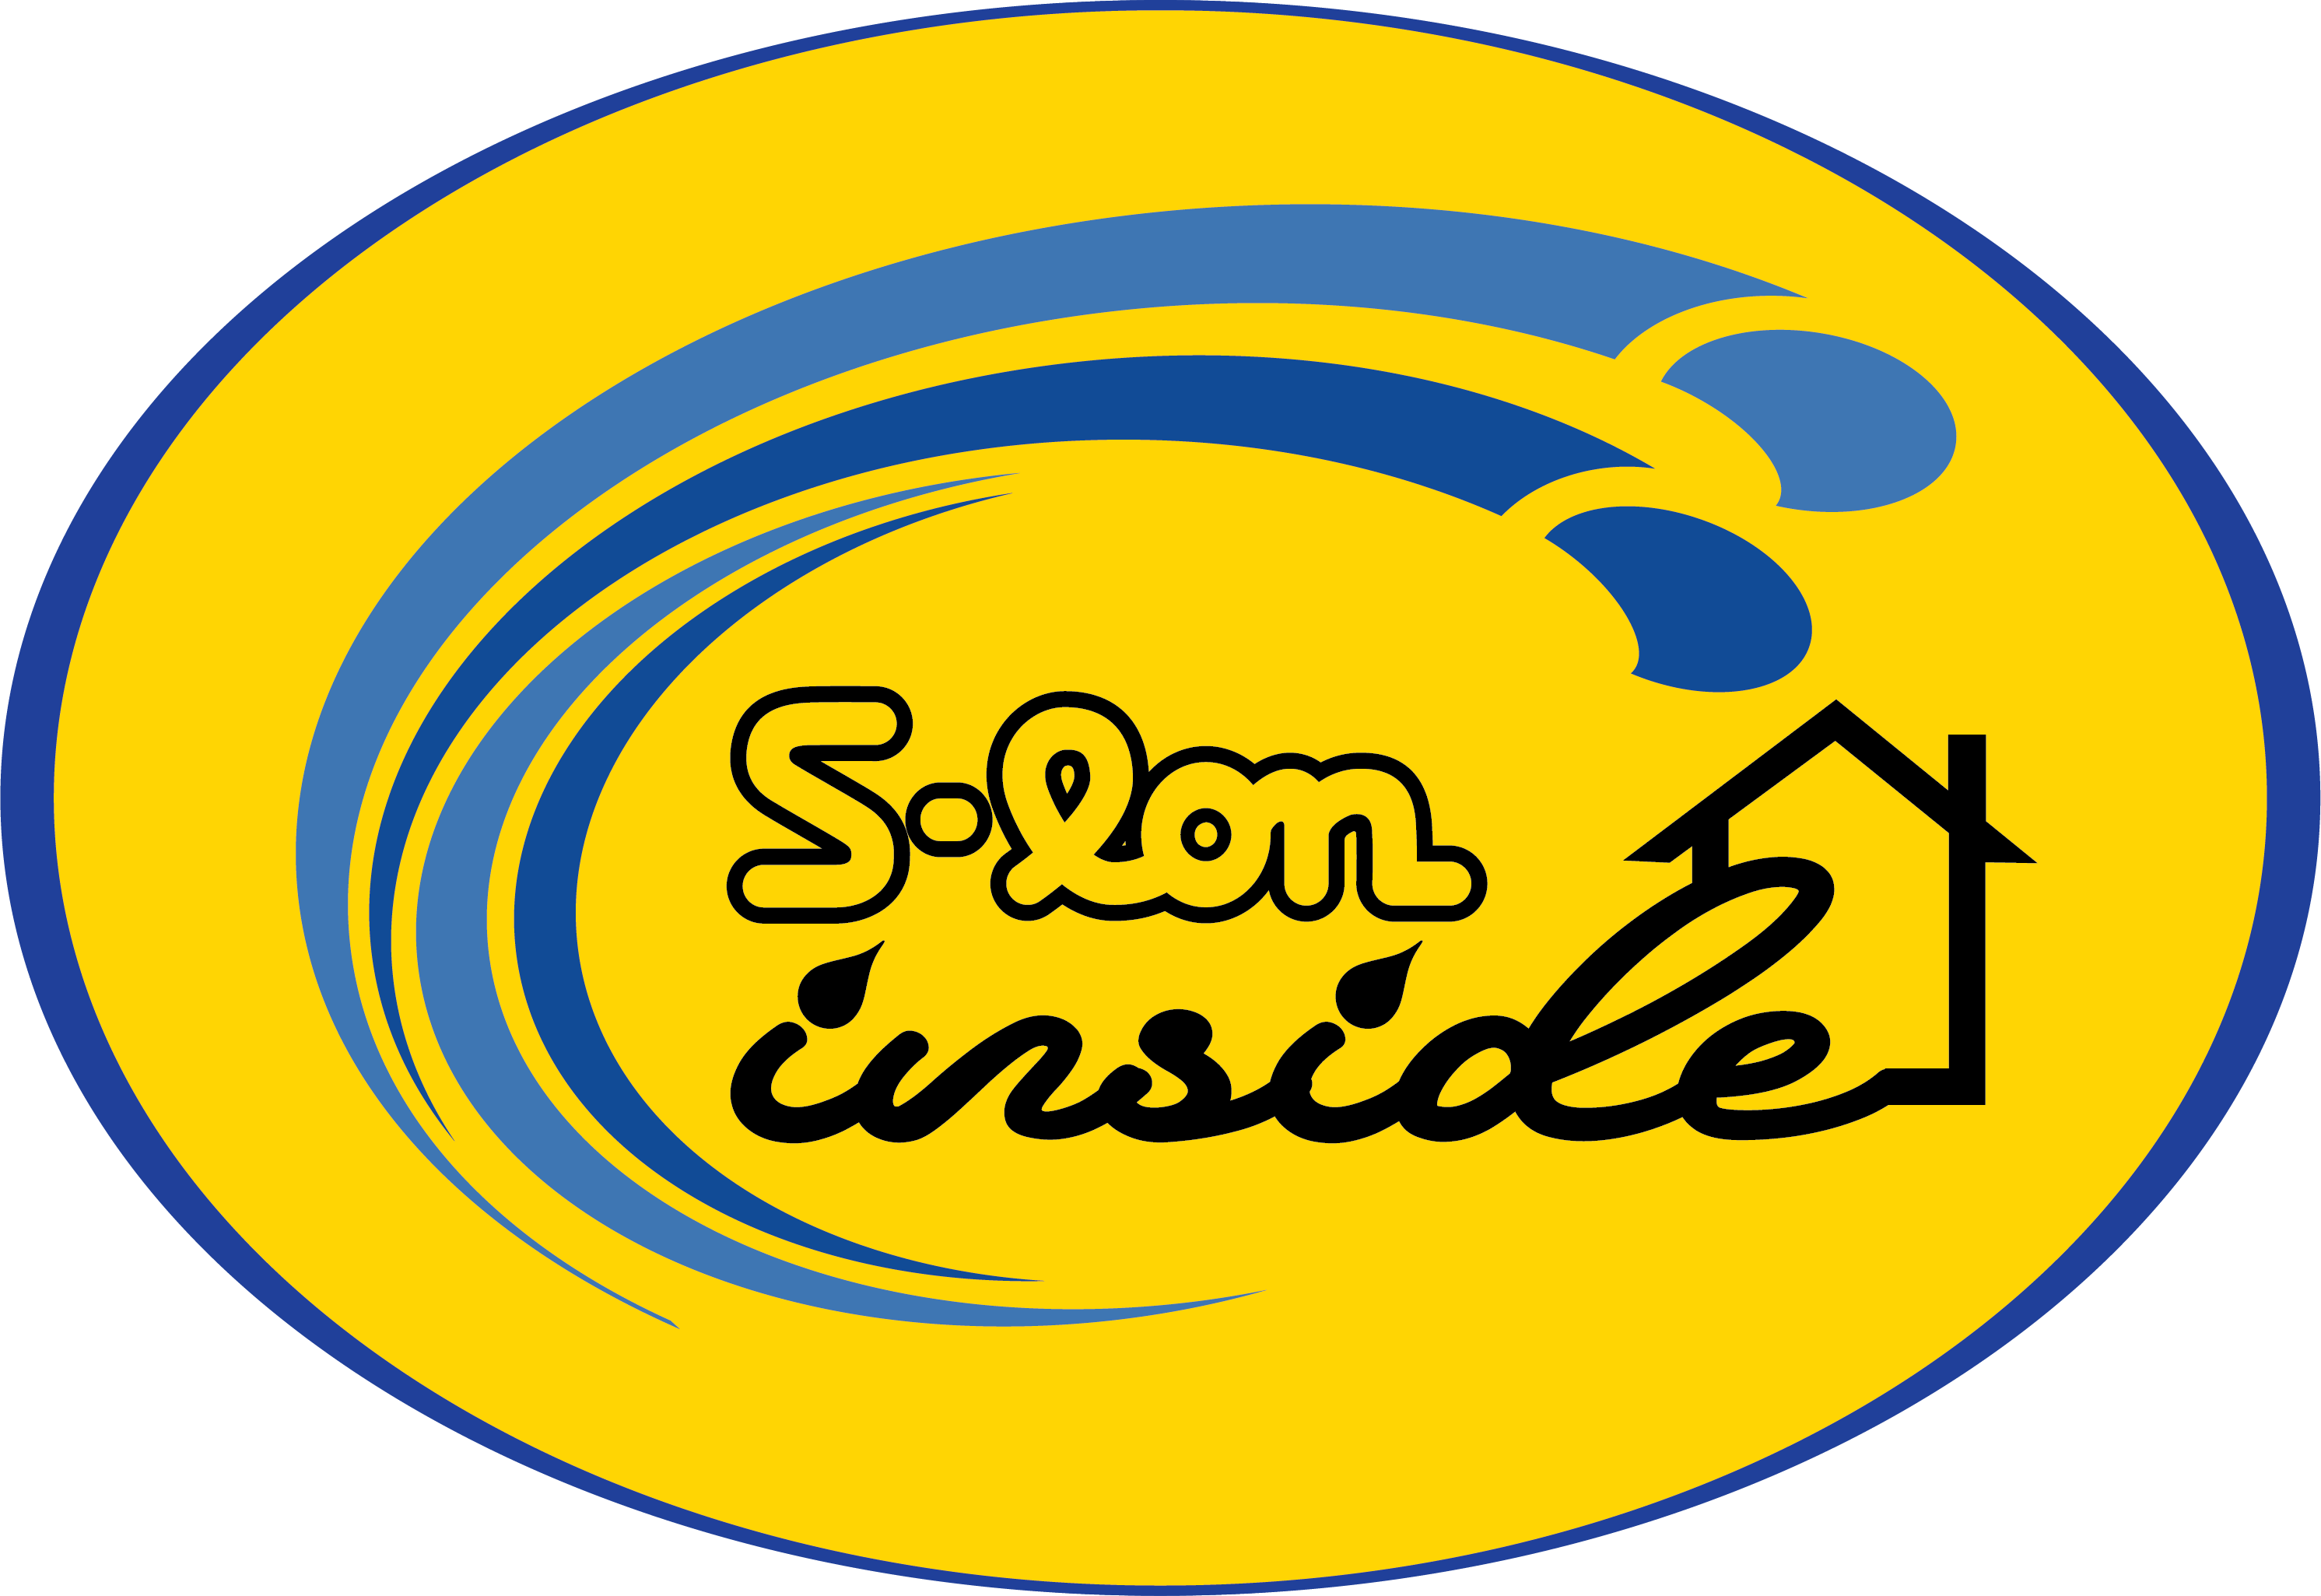 S-lon inside